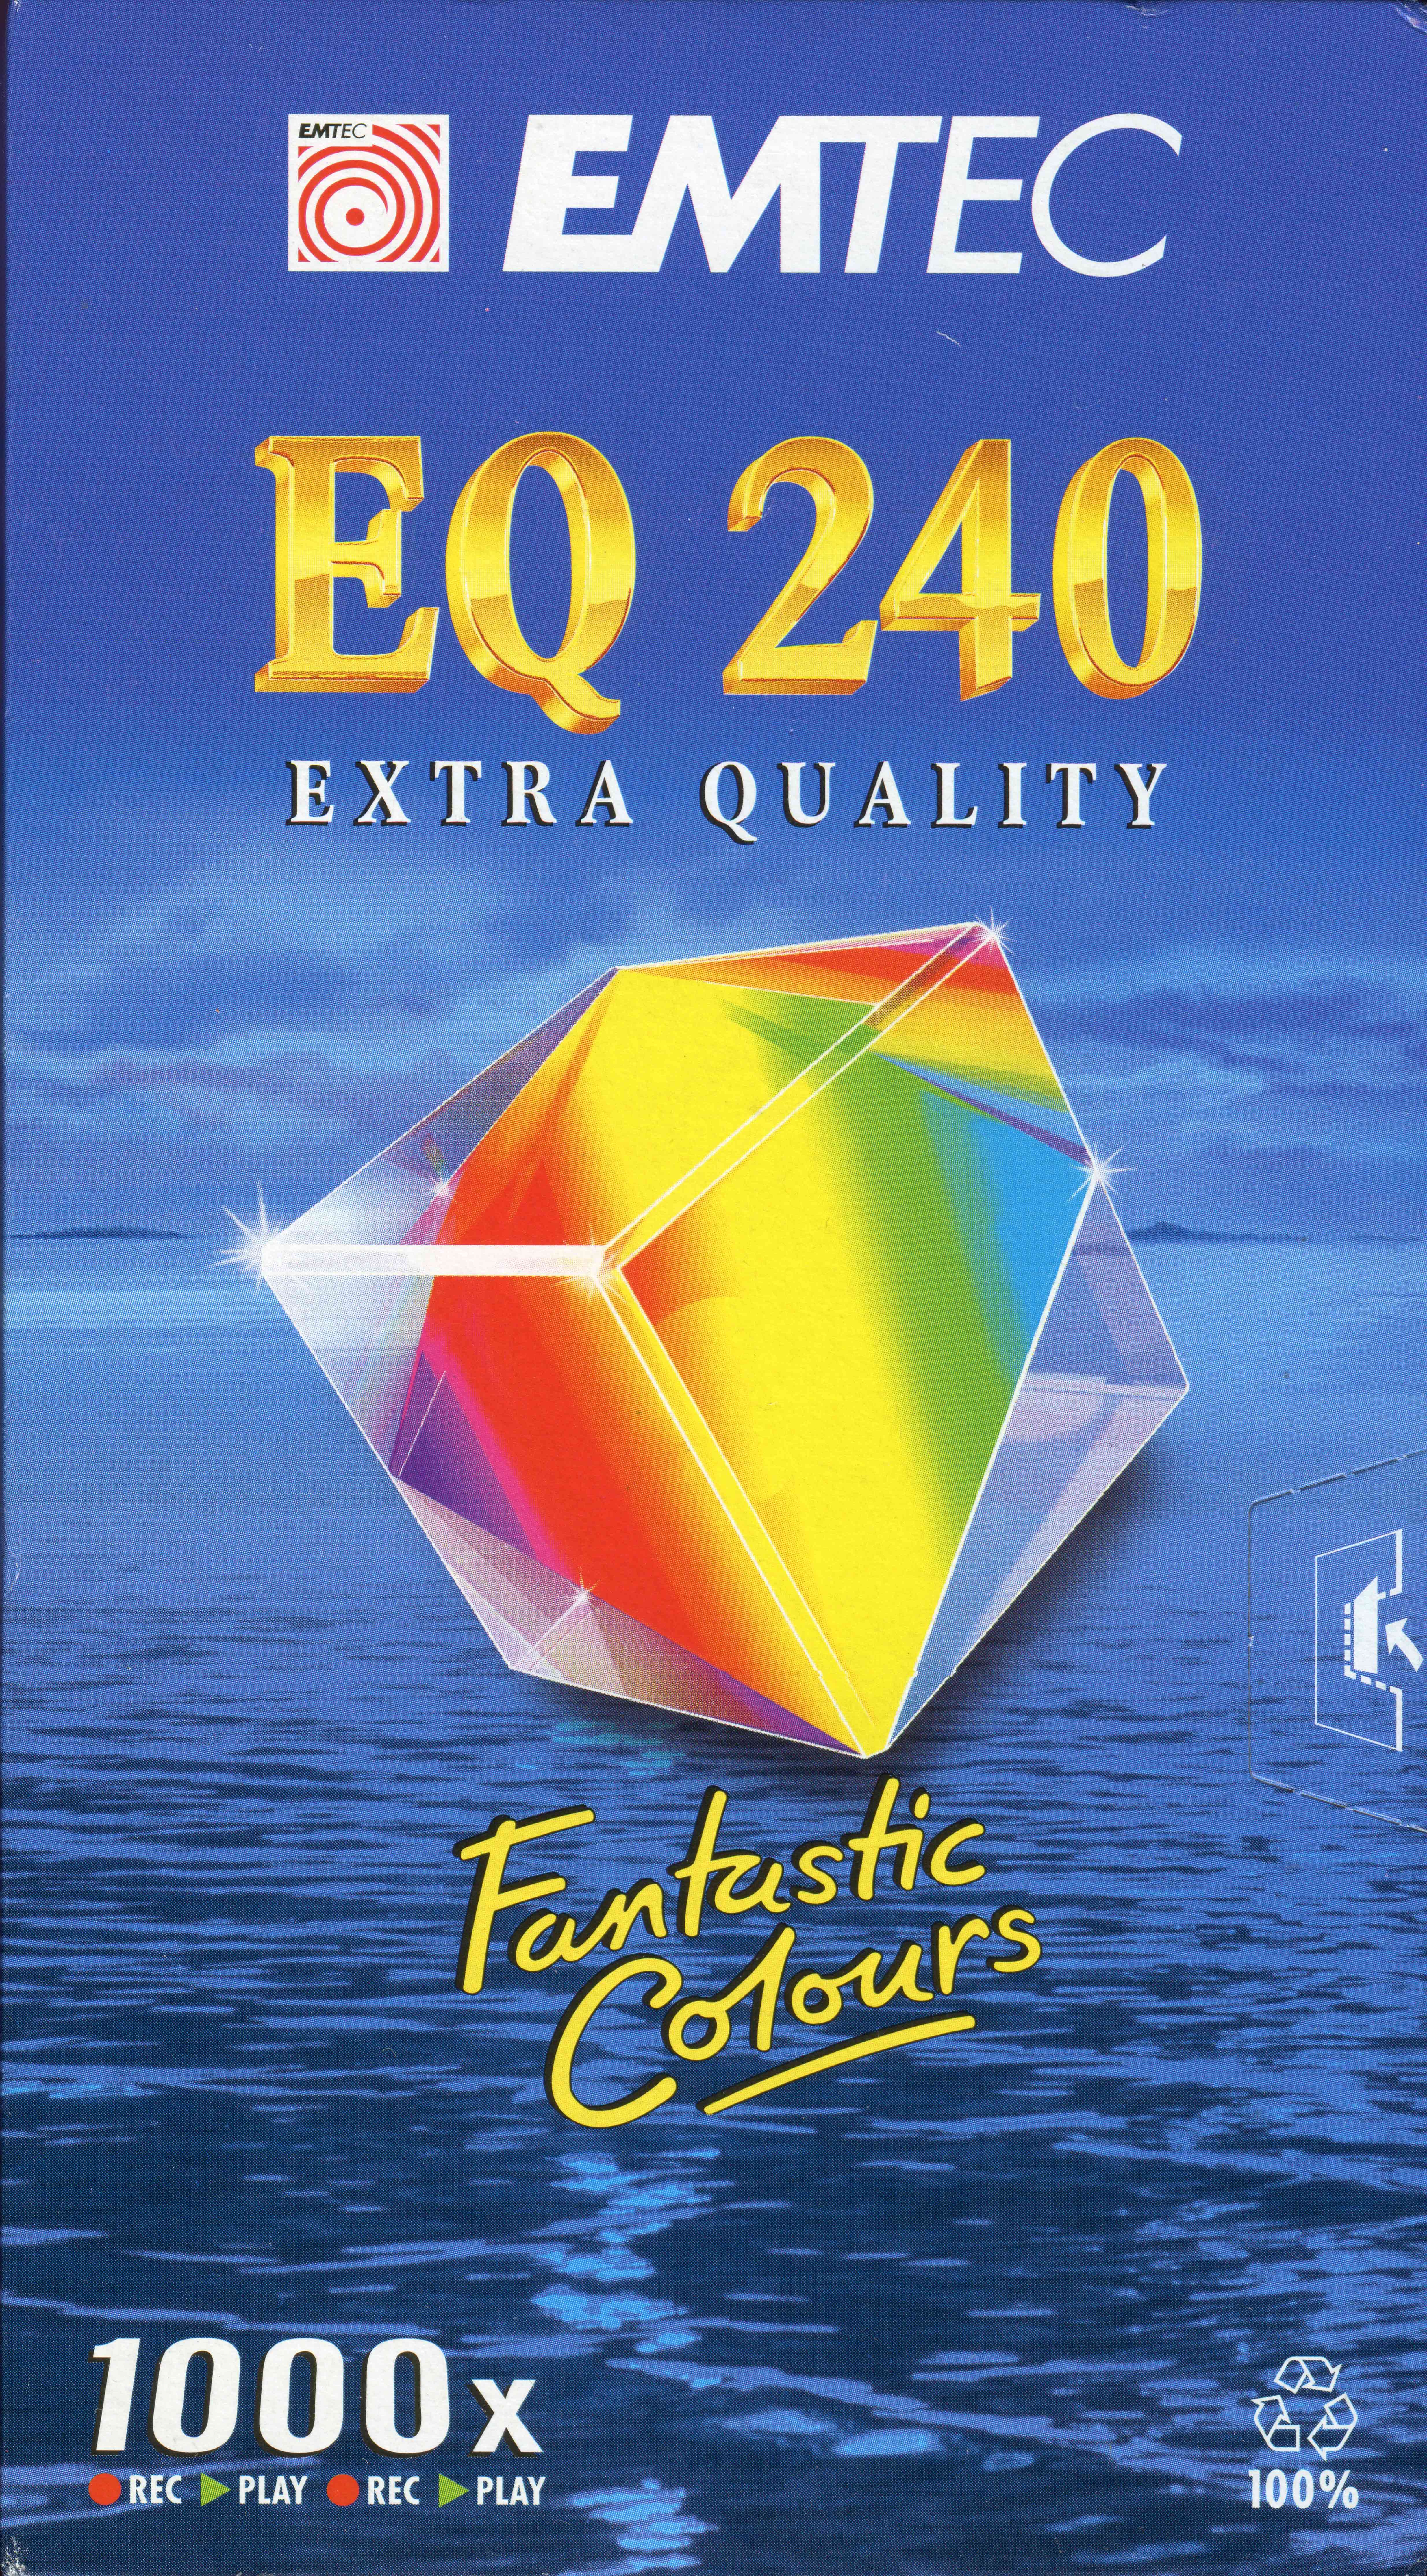 Emtec EQ 240 cassette VHS 